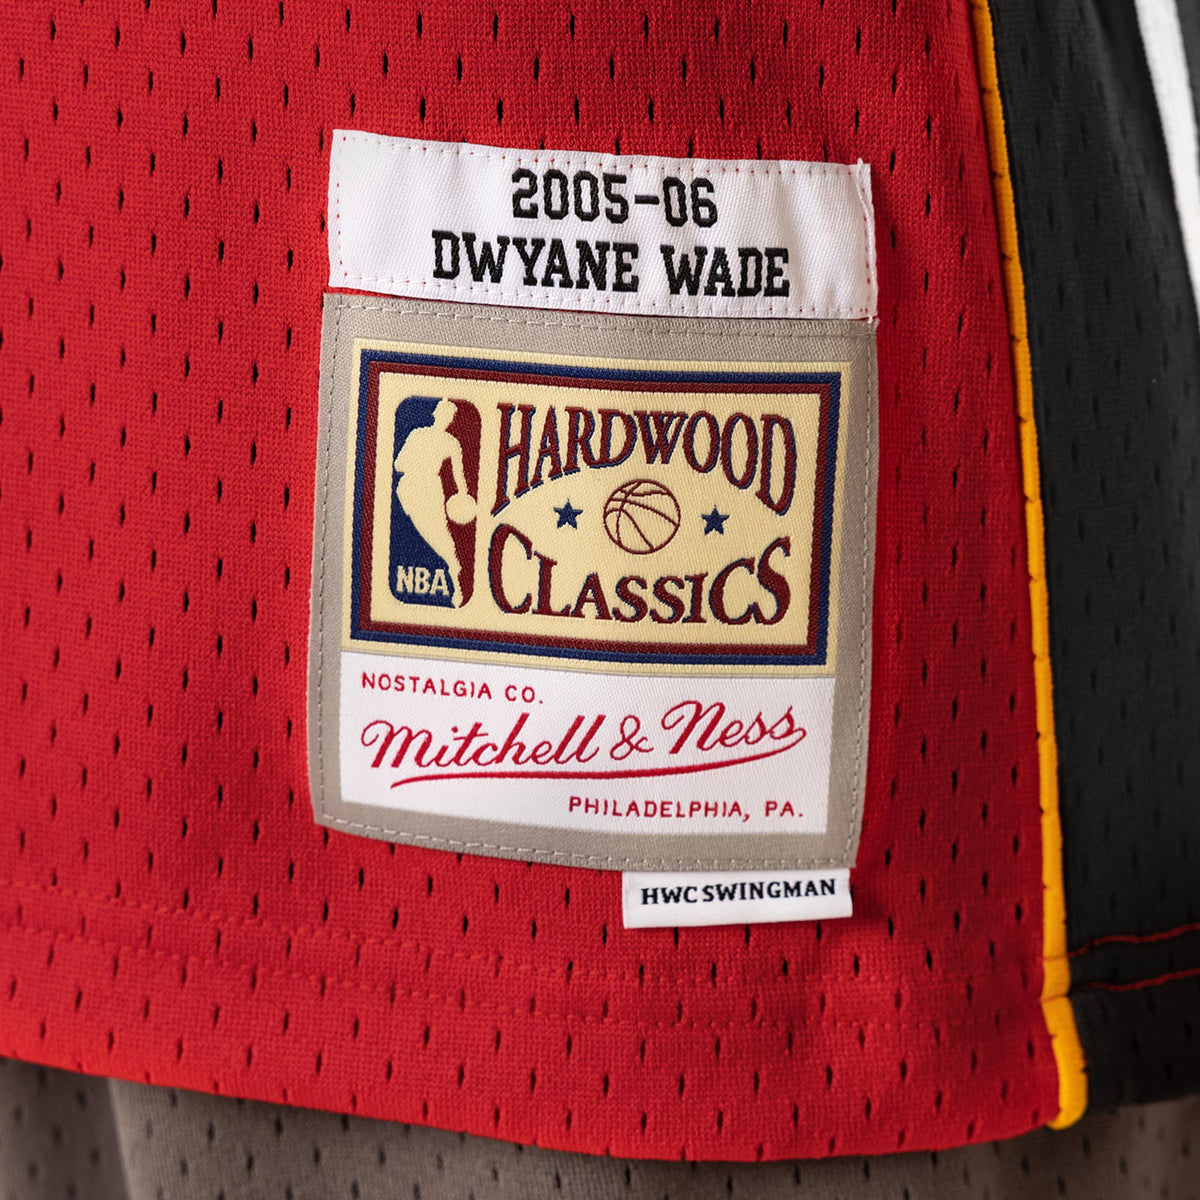 Dwyane Wade 05-06 Miami Heat Authentic Jersey